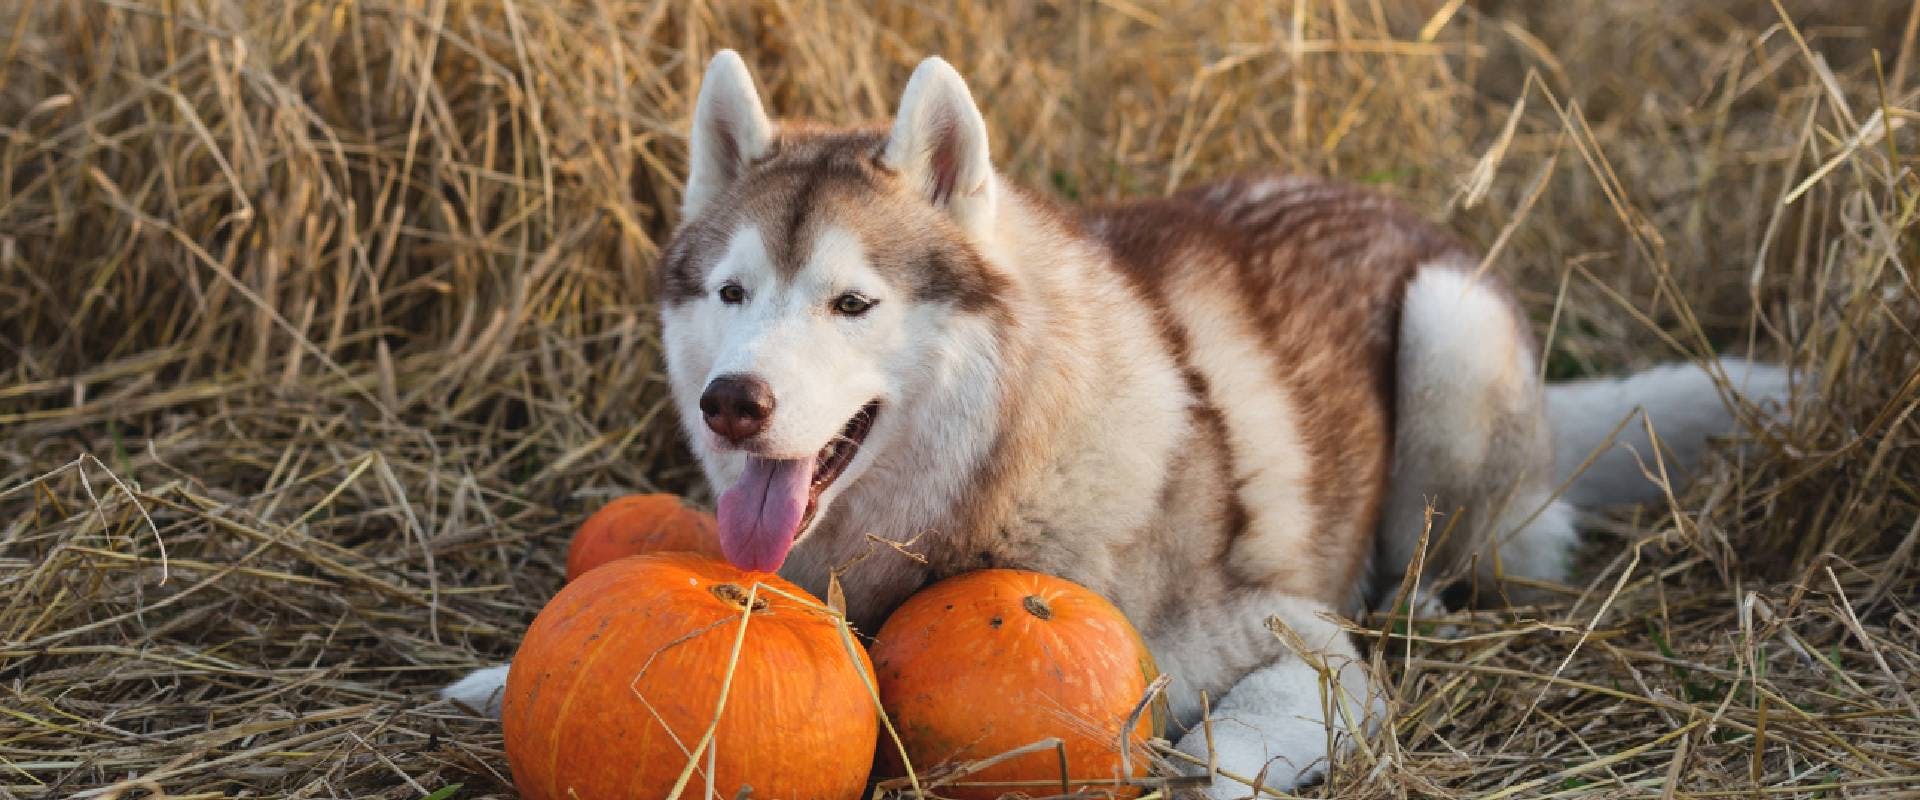 Siberian Husky on the rye field background lying next to a pumpkin